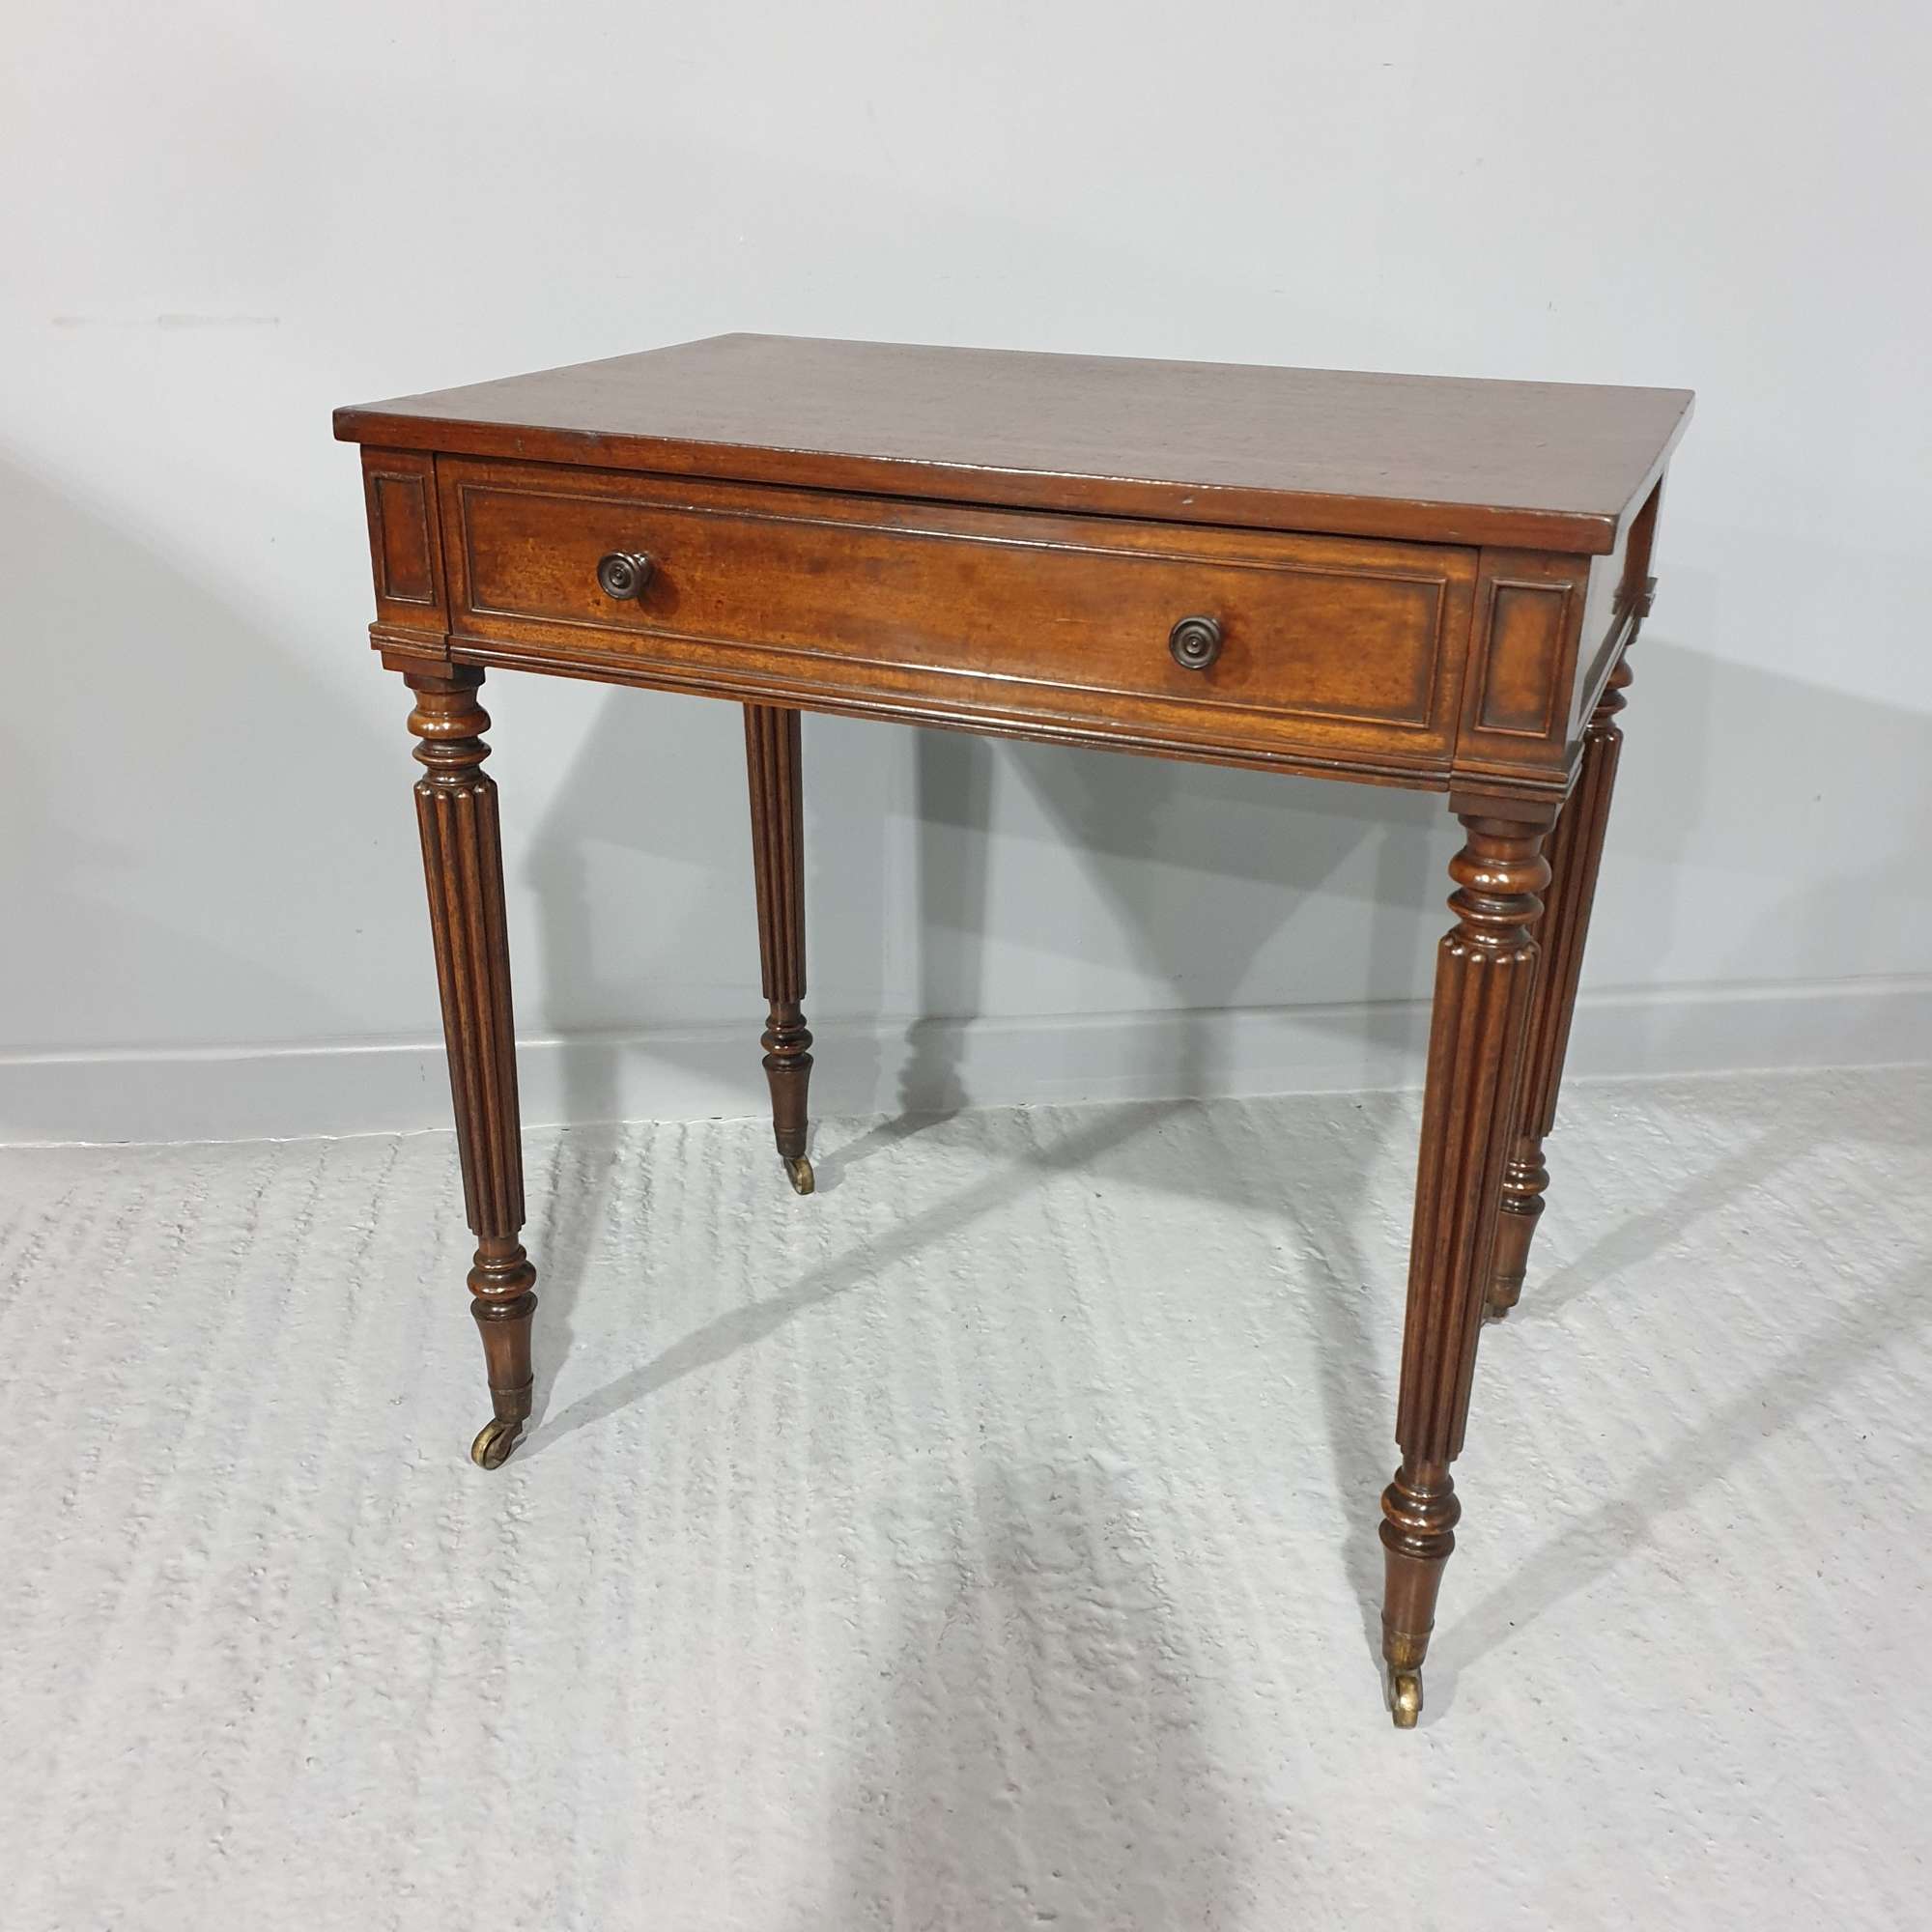 Fine William 4th Antique Side Table